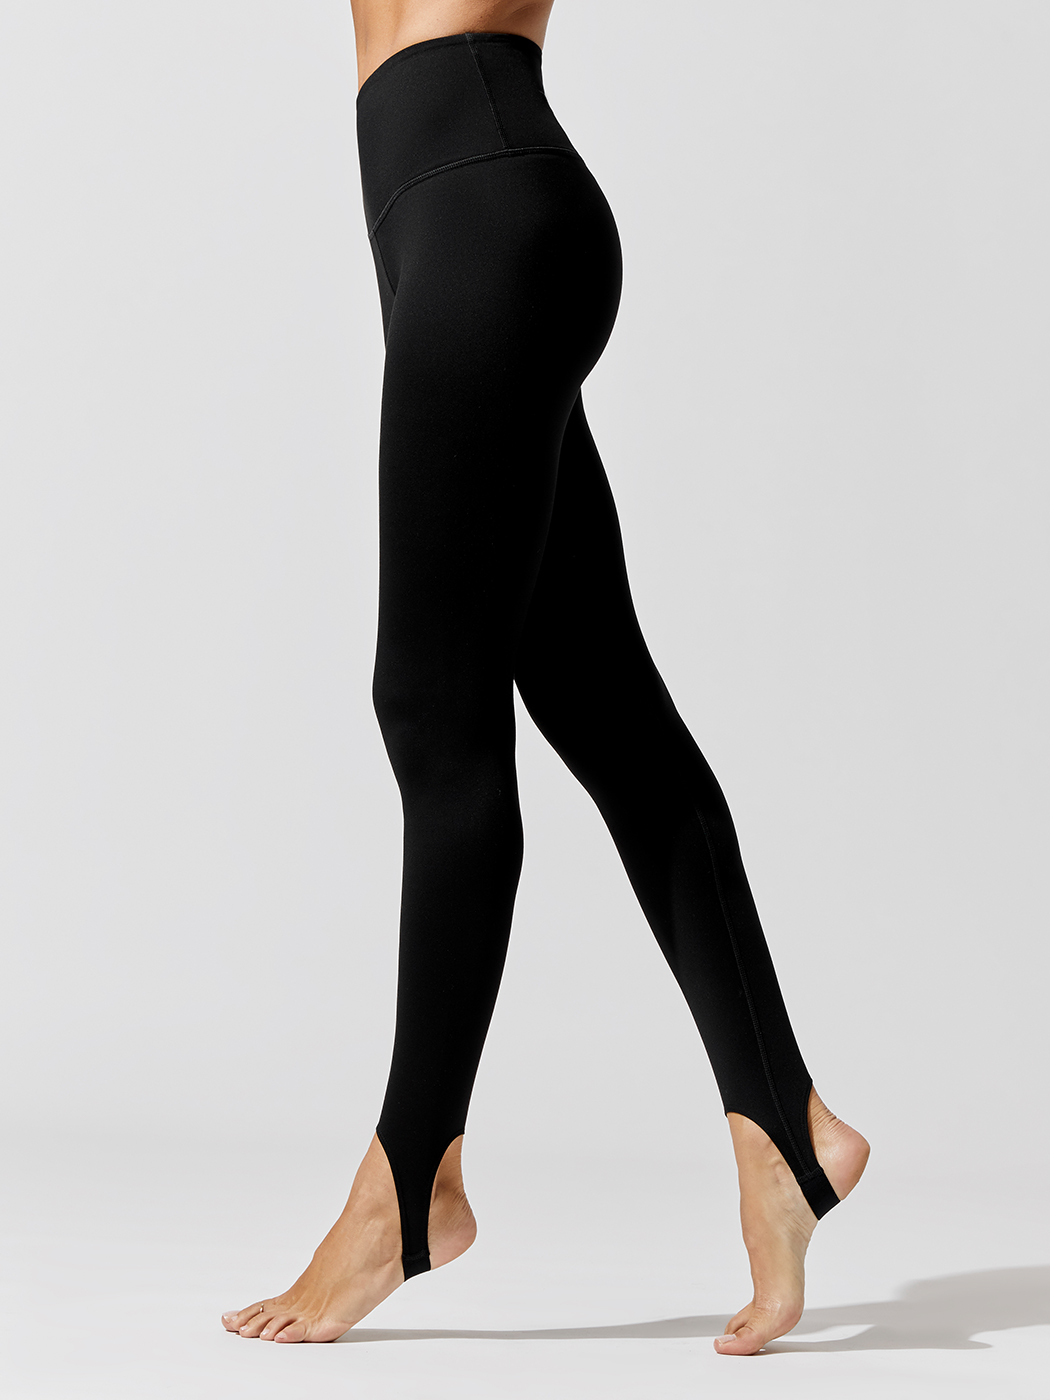 Stirrup Leggings: A Stylish Alternative To Yoga Pants